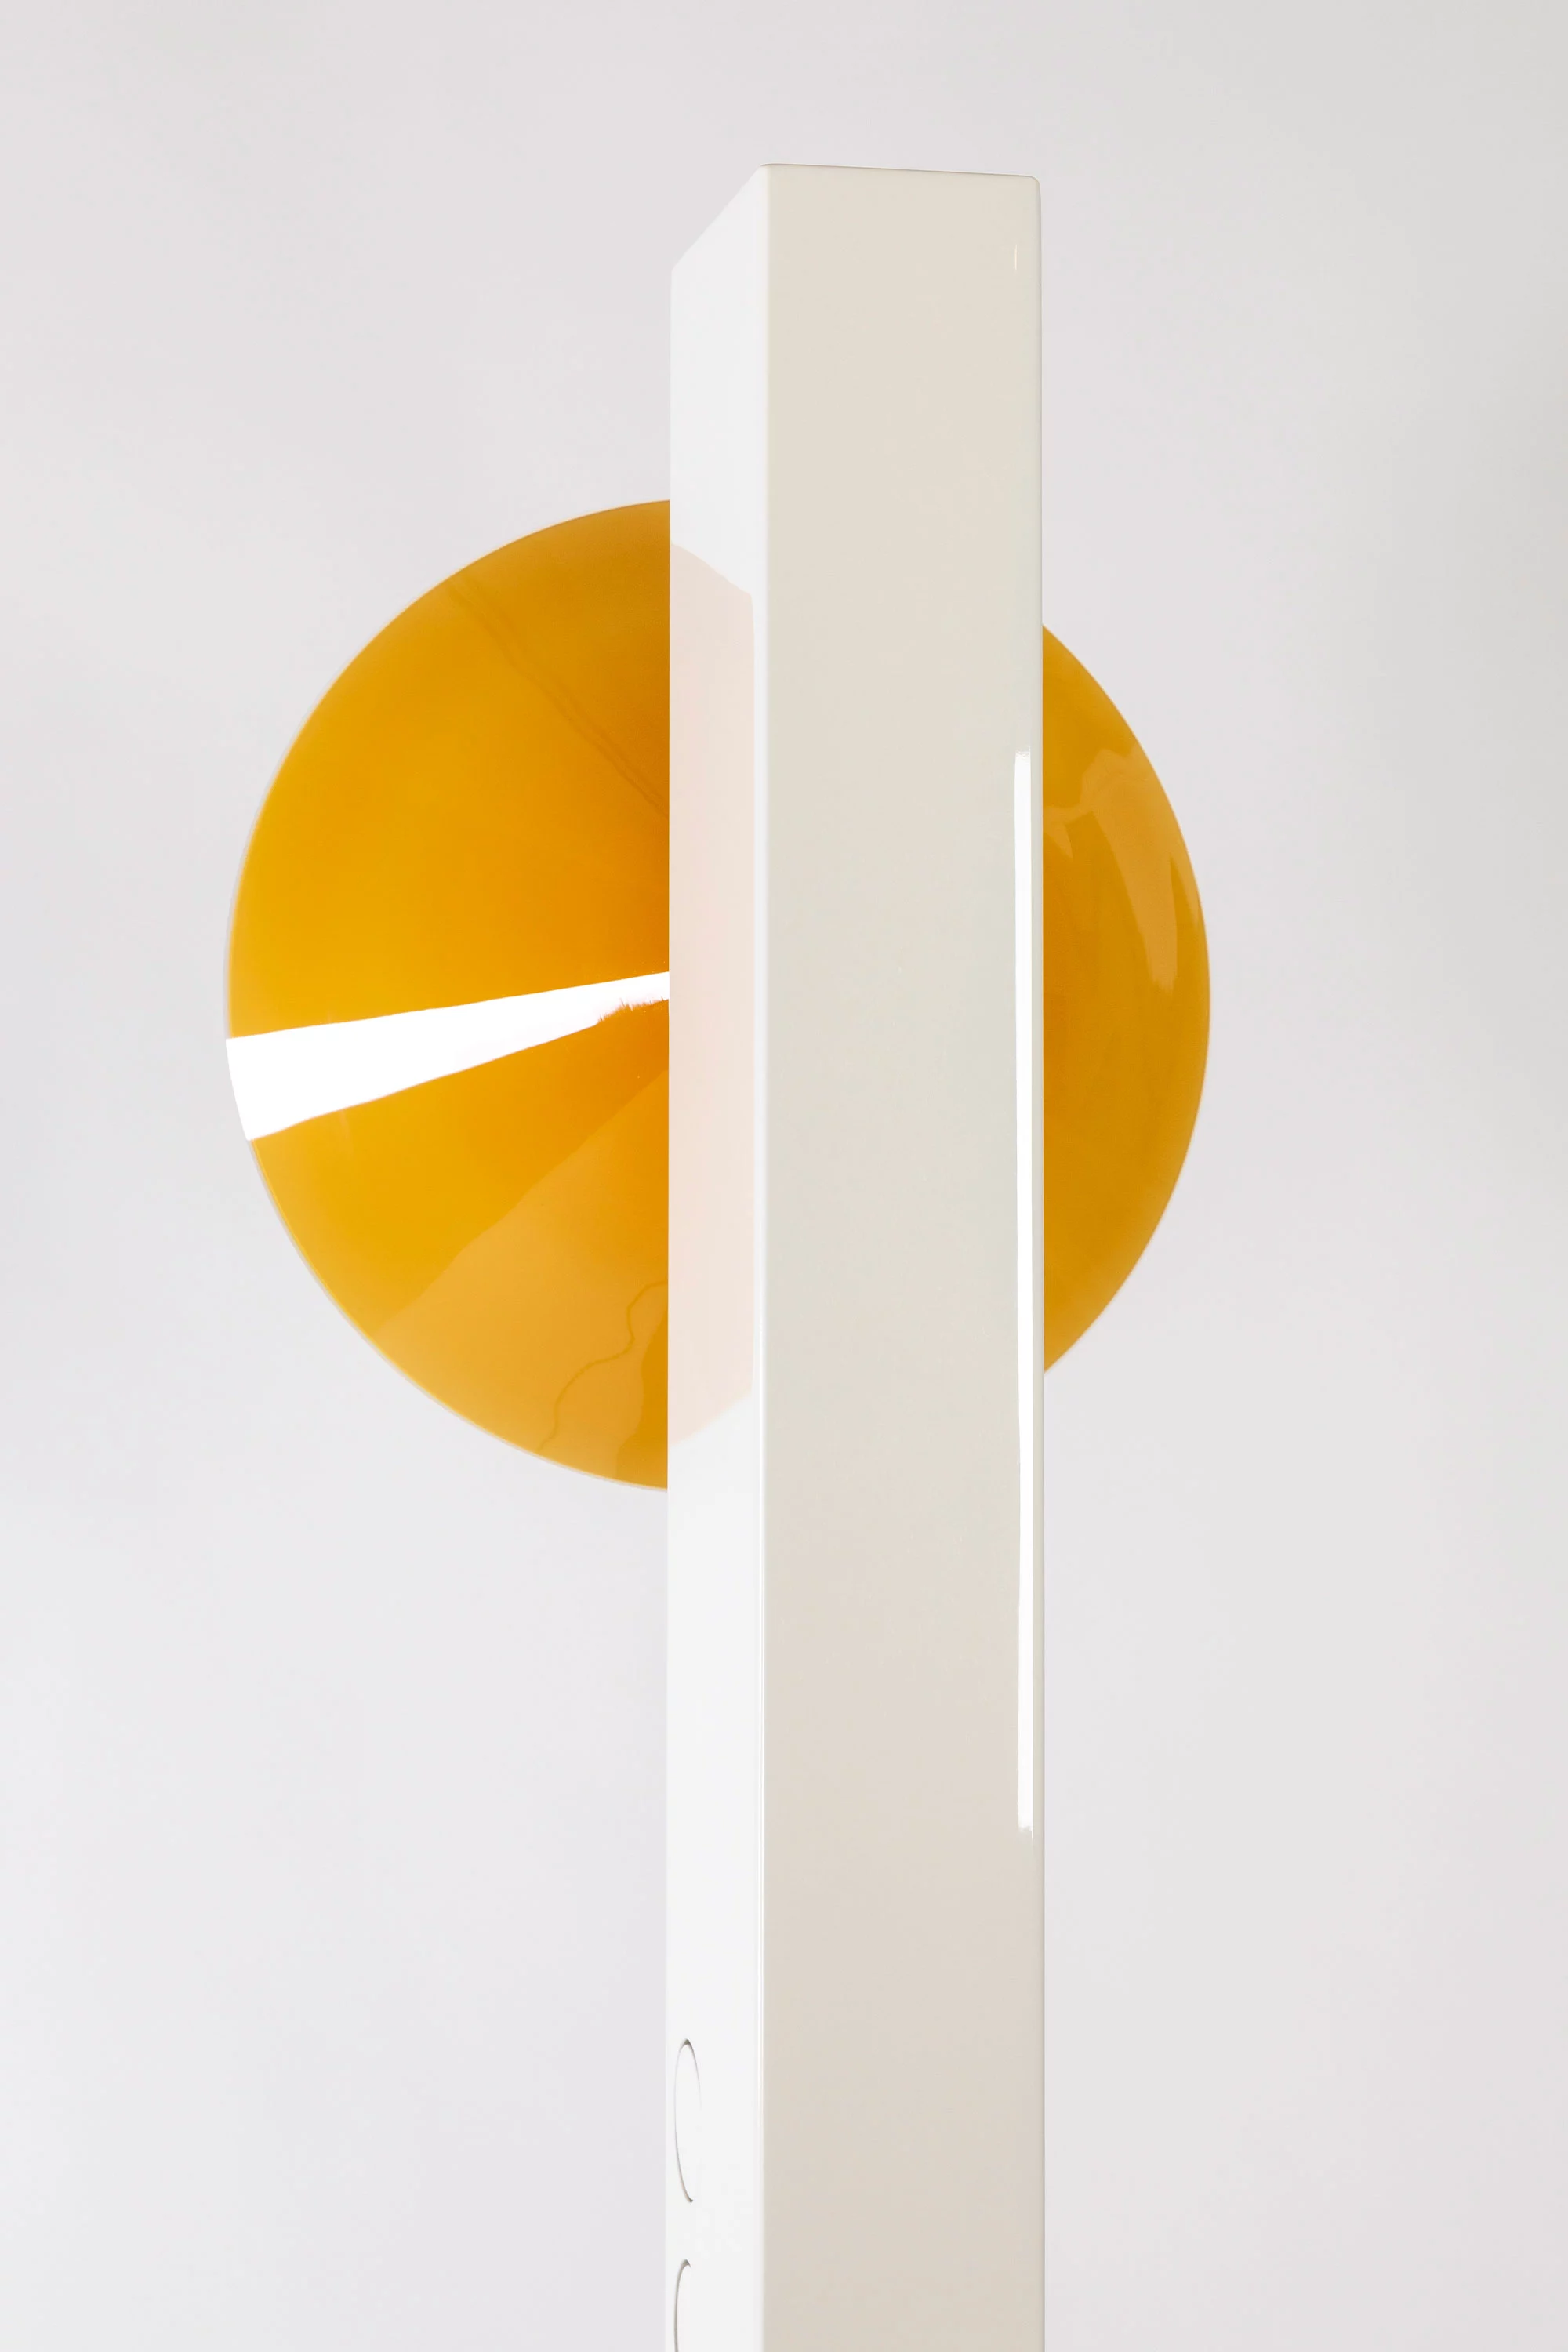 Signal F2 POLYCHROMATIC - Edward and Jay Barber and Osgerby - Floor light - Galerie kreo